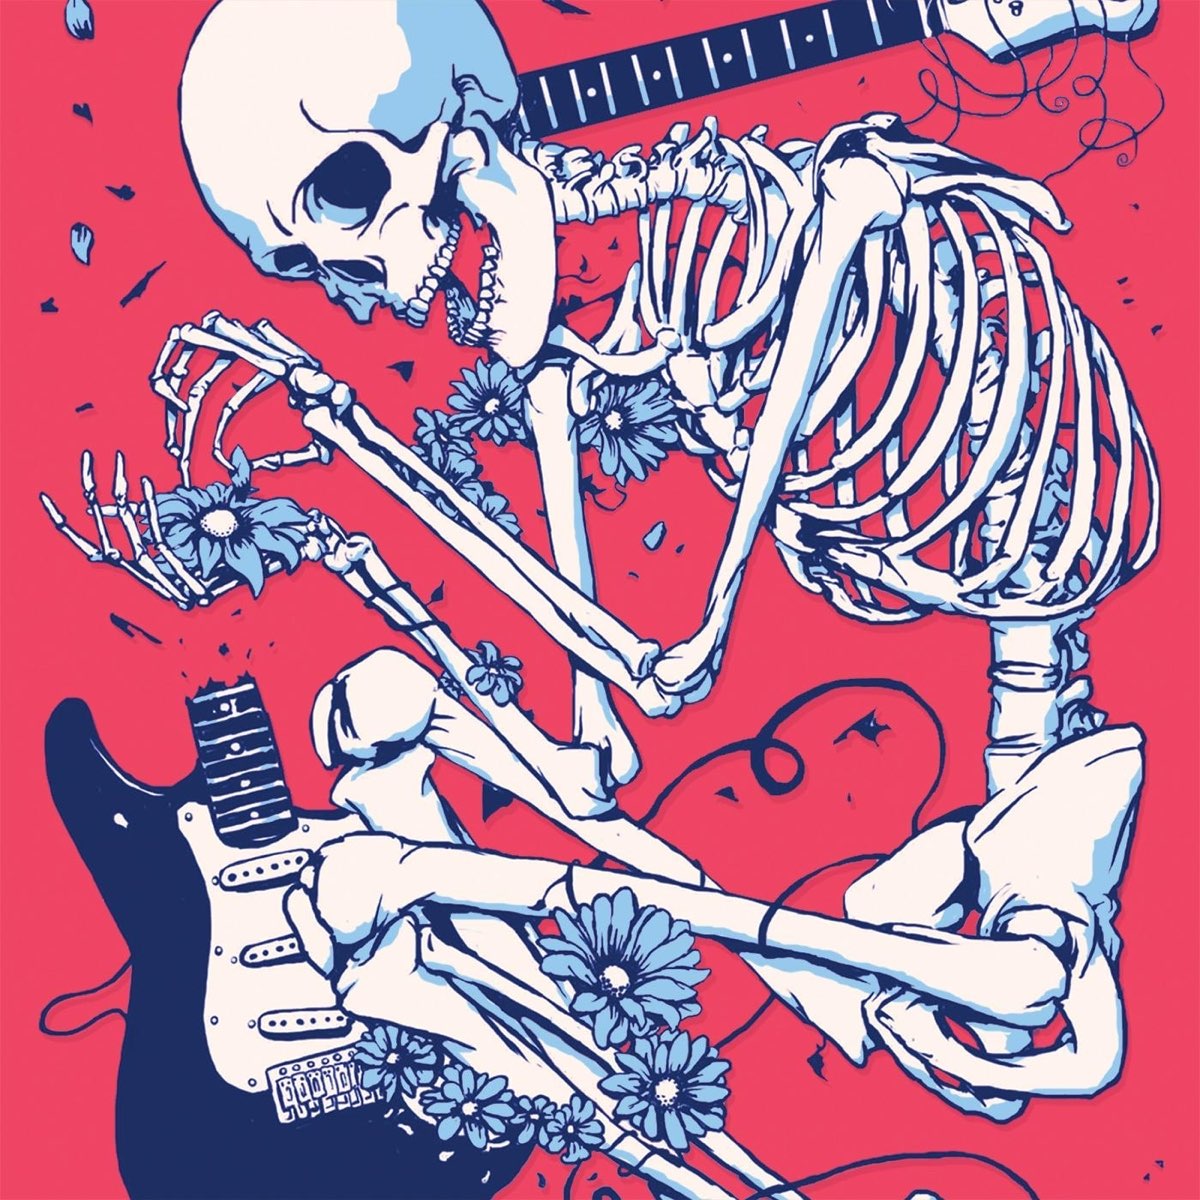 Bones ctrlaltdelete. Bones обложки альбомов. Bones (музыкант). Bones музыкант альбомы. Bones музыкант обложка.